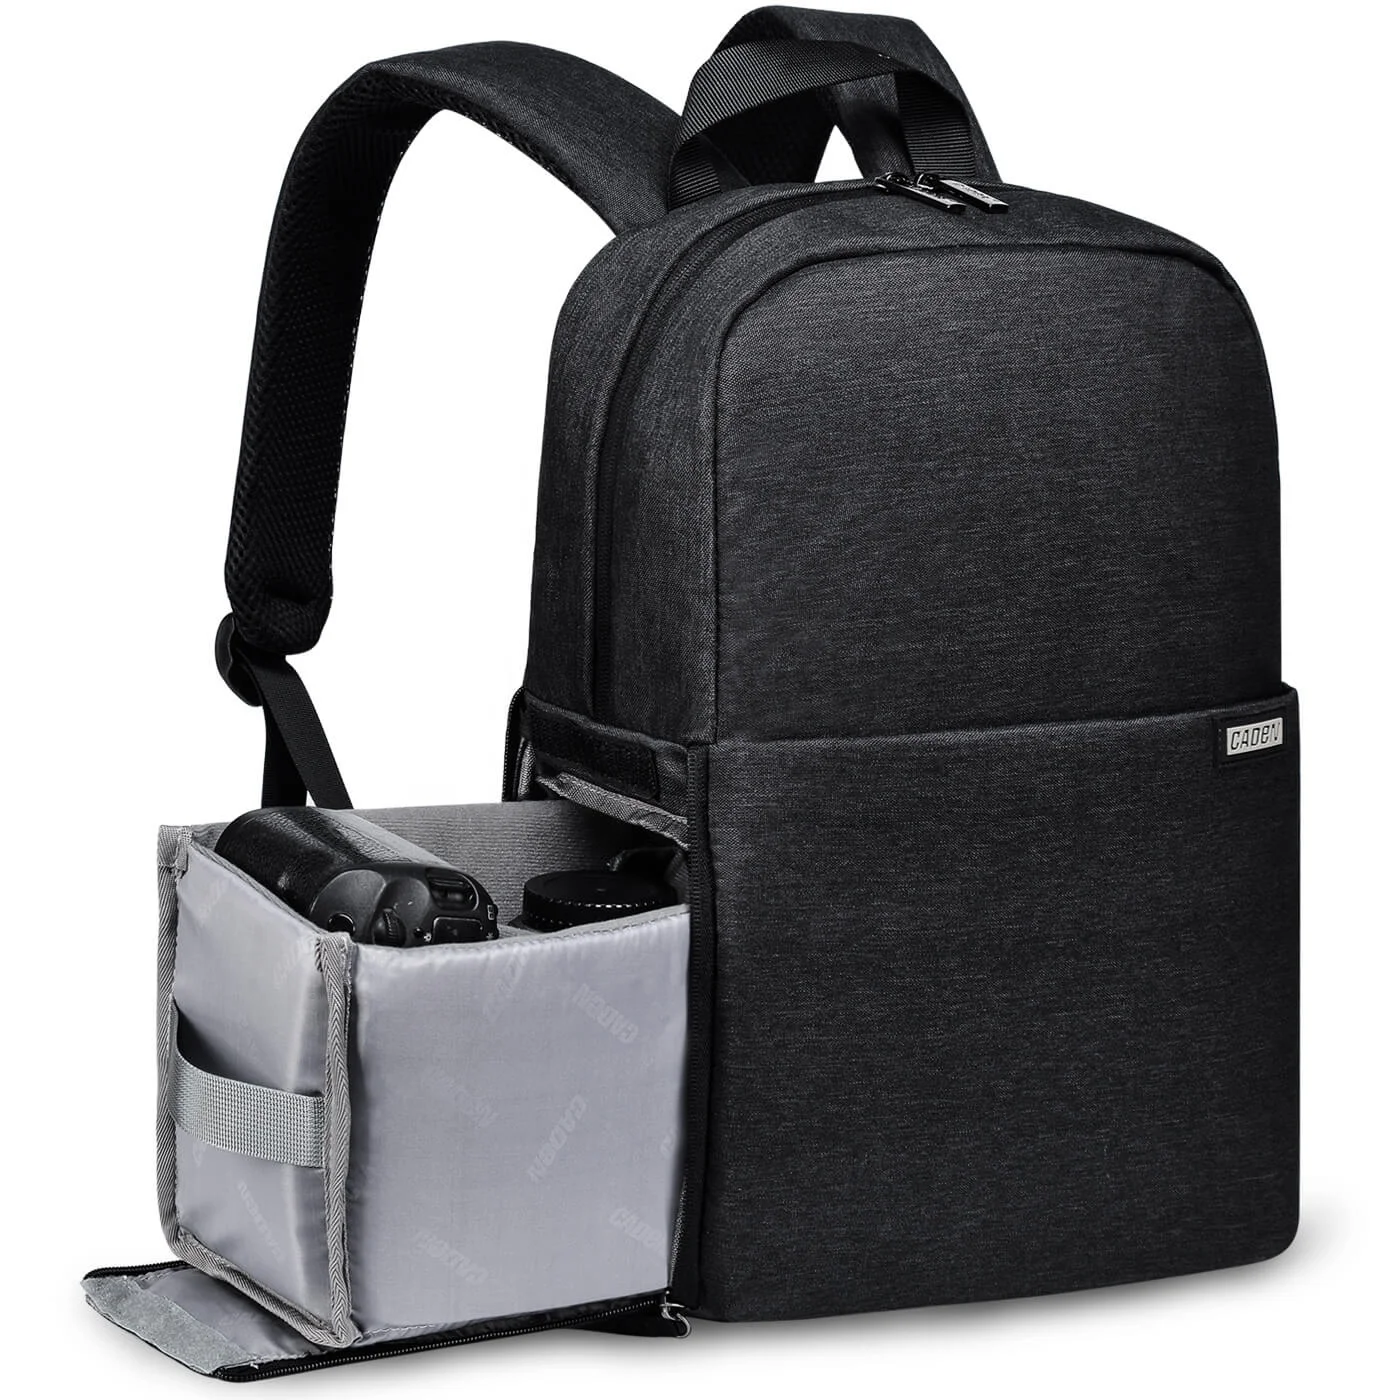 

Caden L4-1S Custom Waterproof Professional Photography Laptop Digital Gear Video Dslr Camera Backpack Bag for Canon Nikon Sony, Black, gray, blue